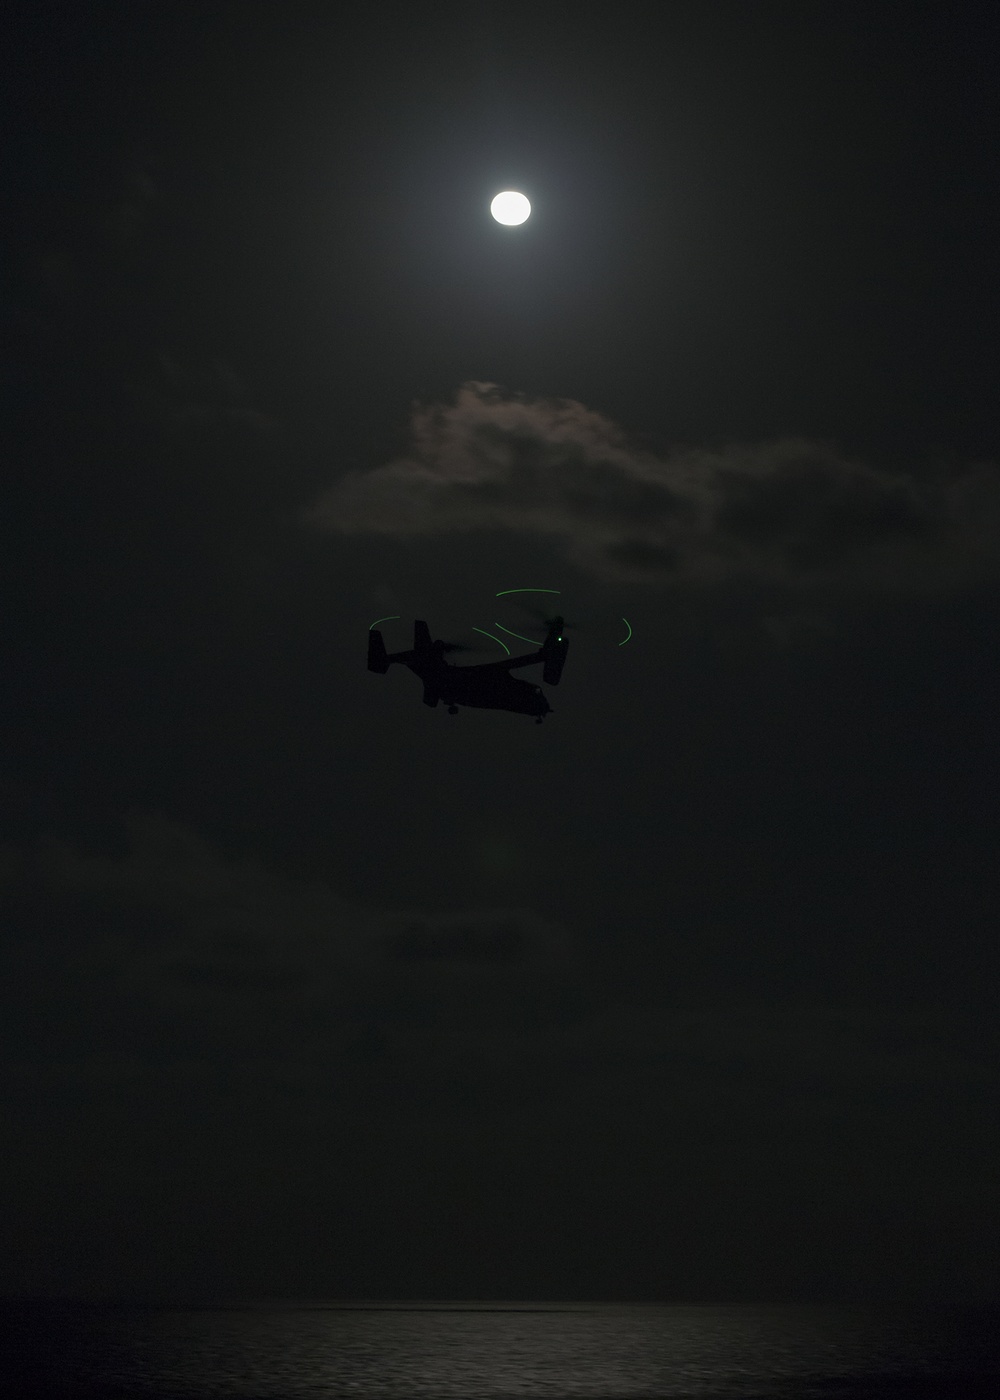 MV-22 Osprey night-vision device flight operations